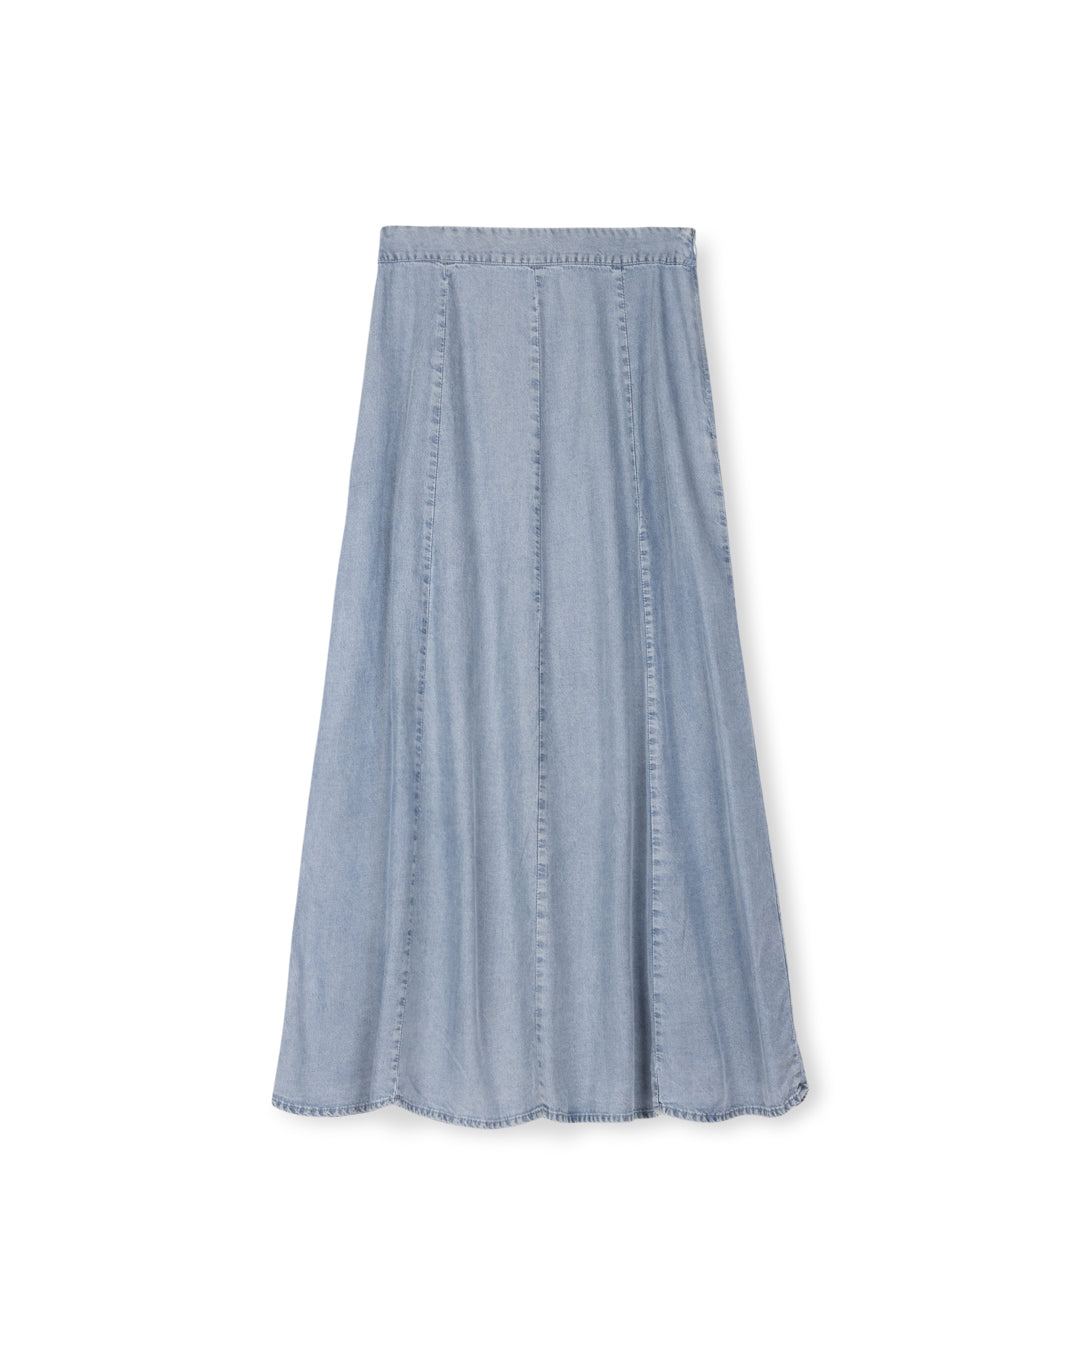 Denim Stitched A-Line Skirt